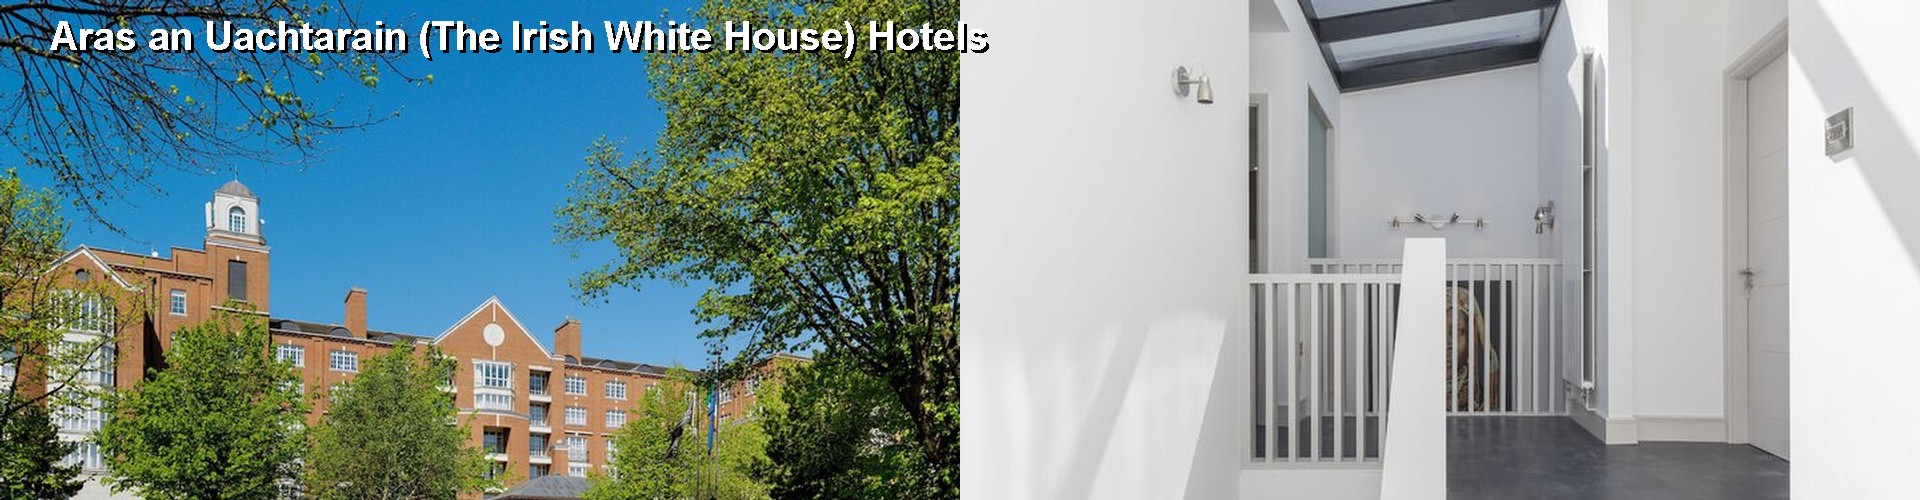 5 Best Hotels near Aras an Uachtarain (The Irish White House)